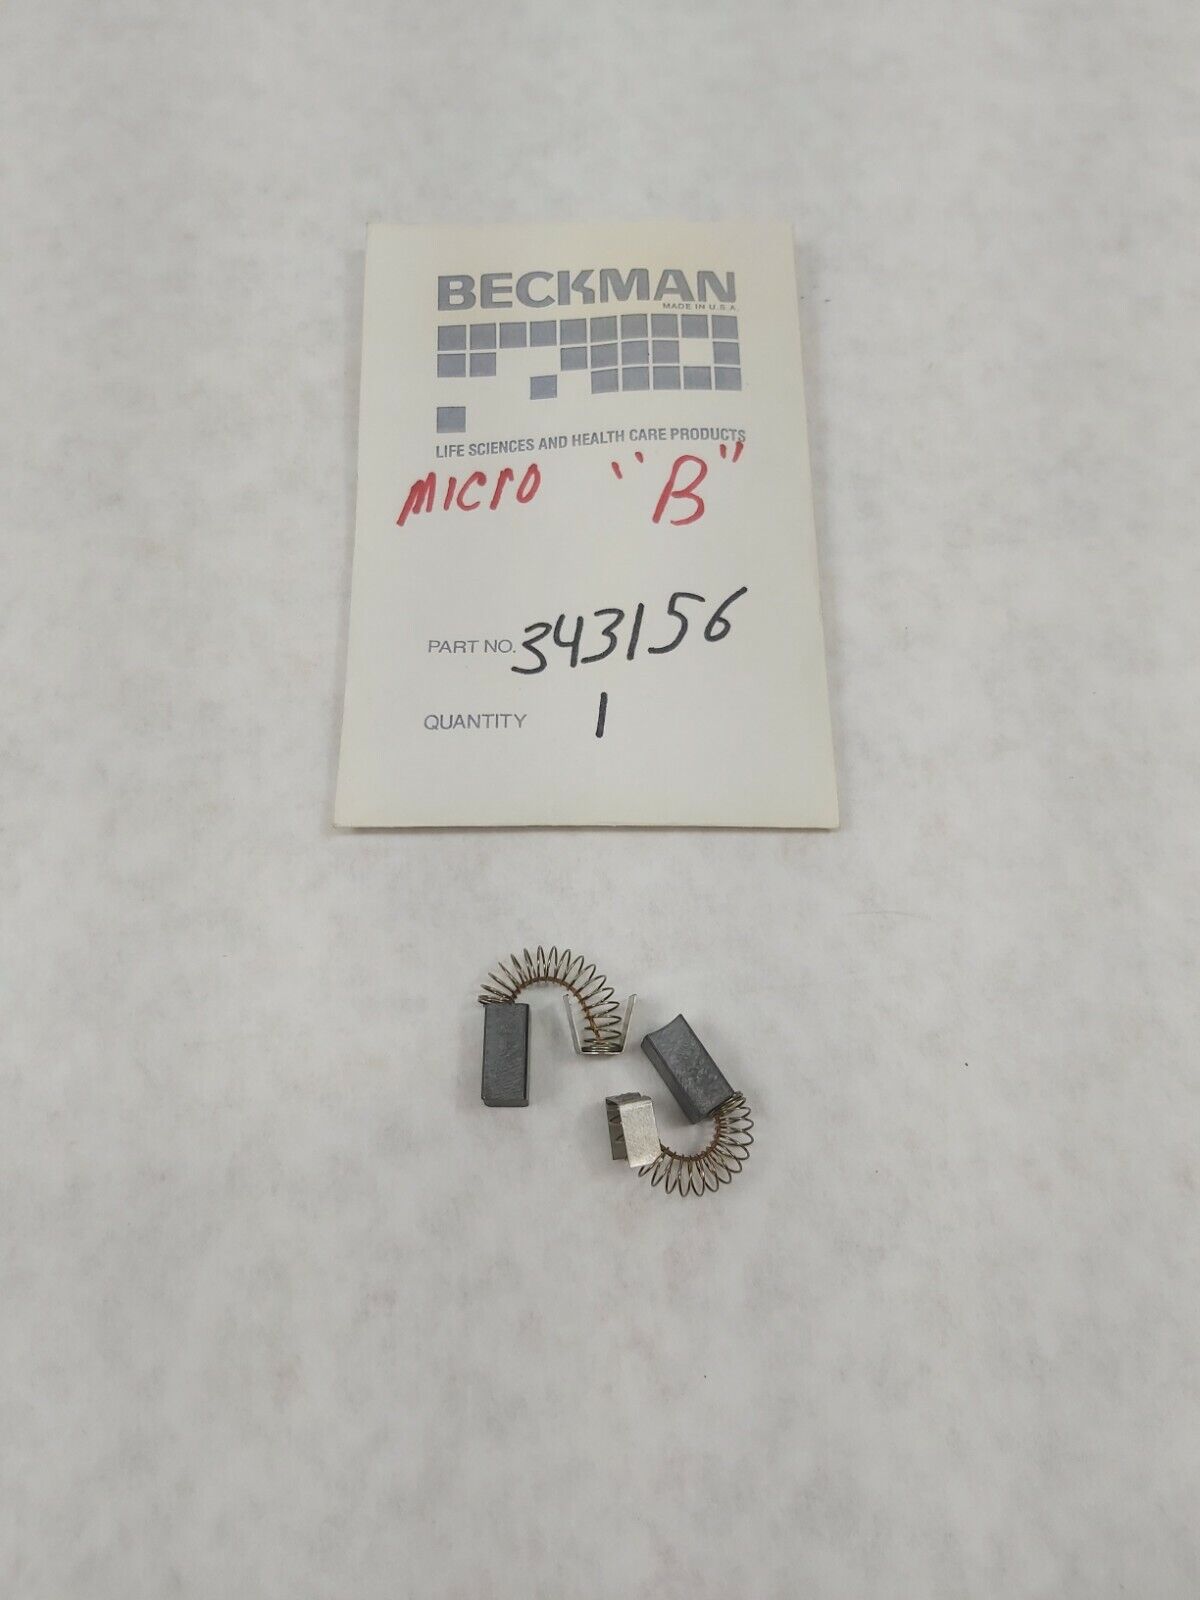 Beckman 343156 Brushes For Microfuge "B" Centrifuge